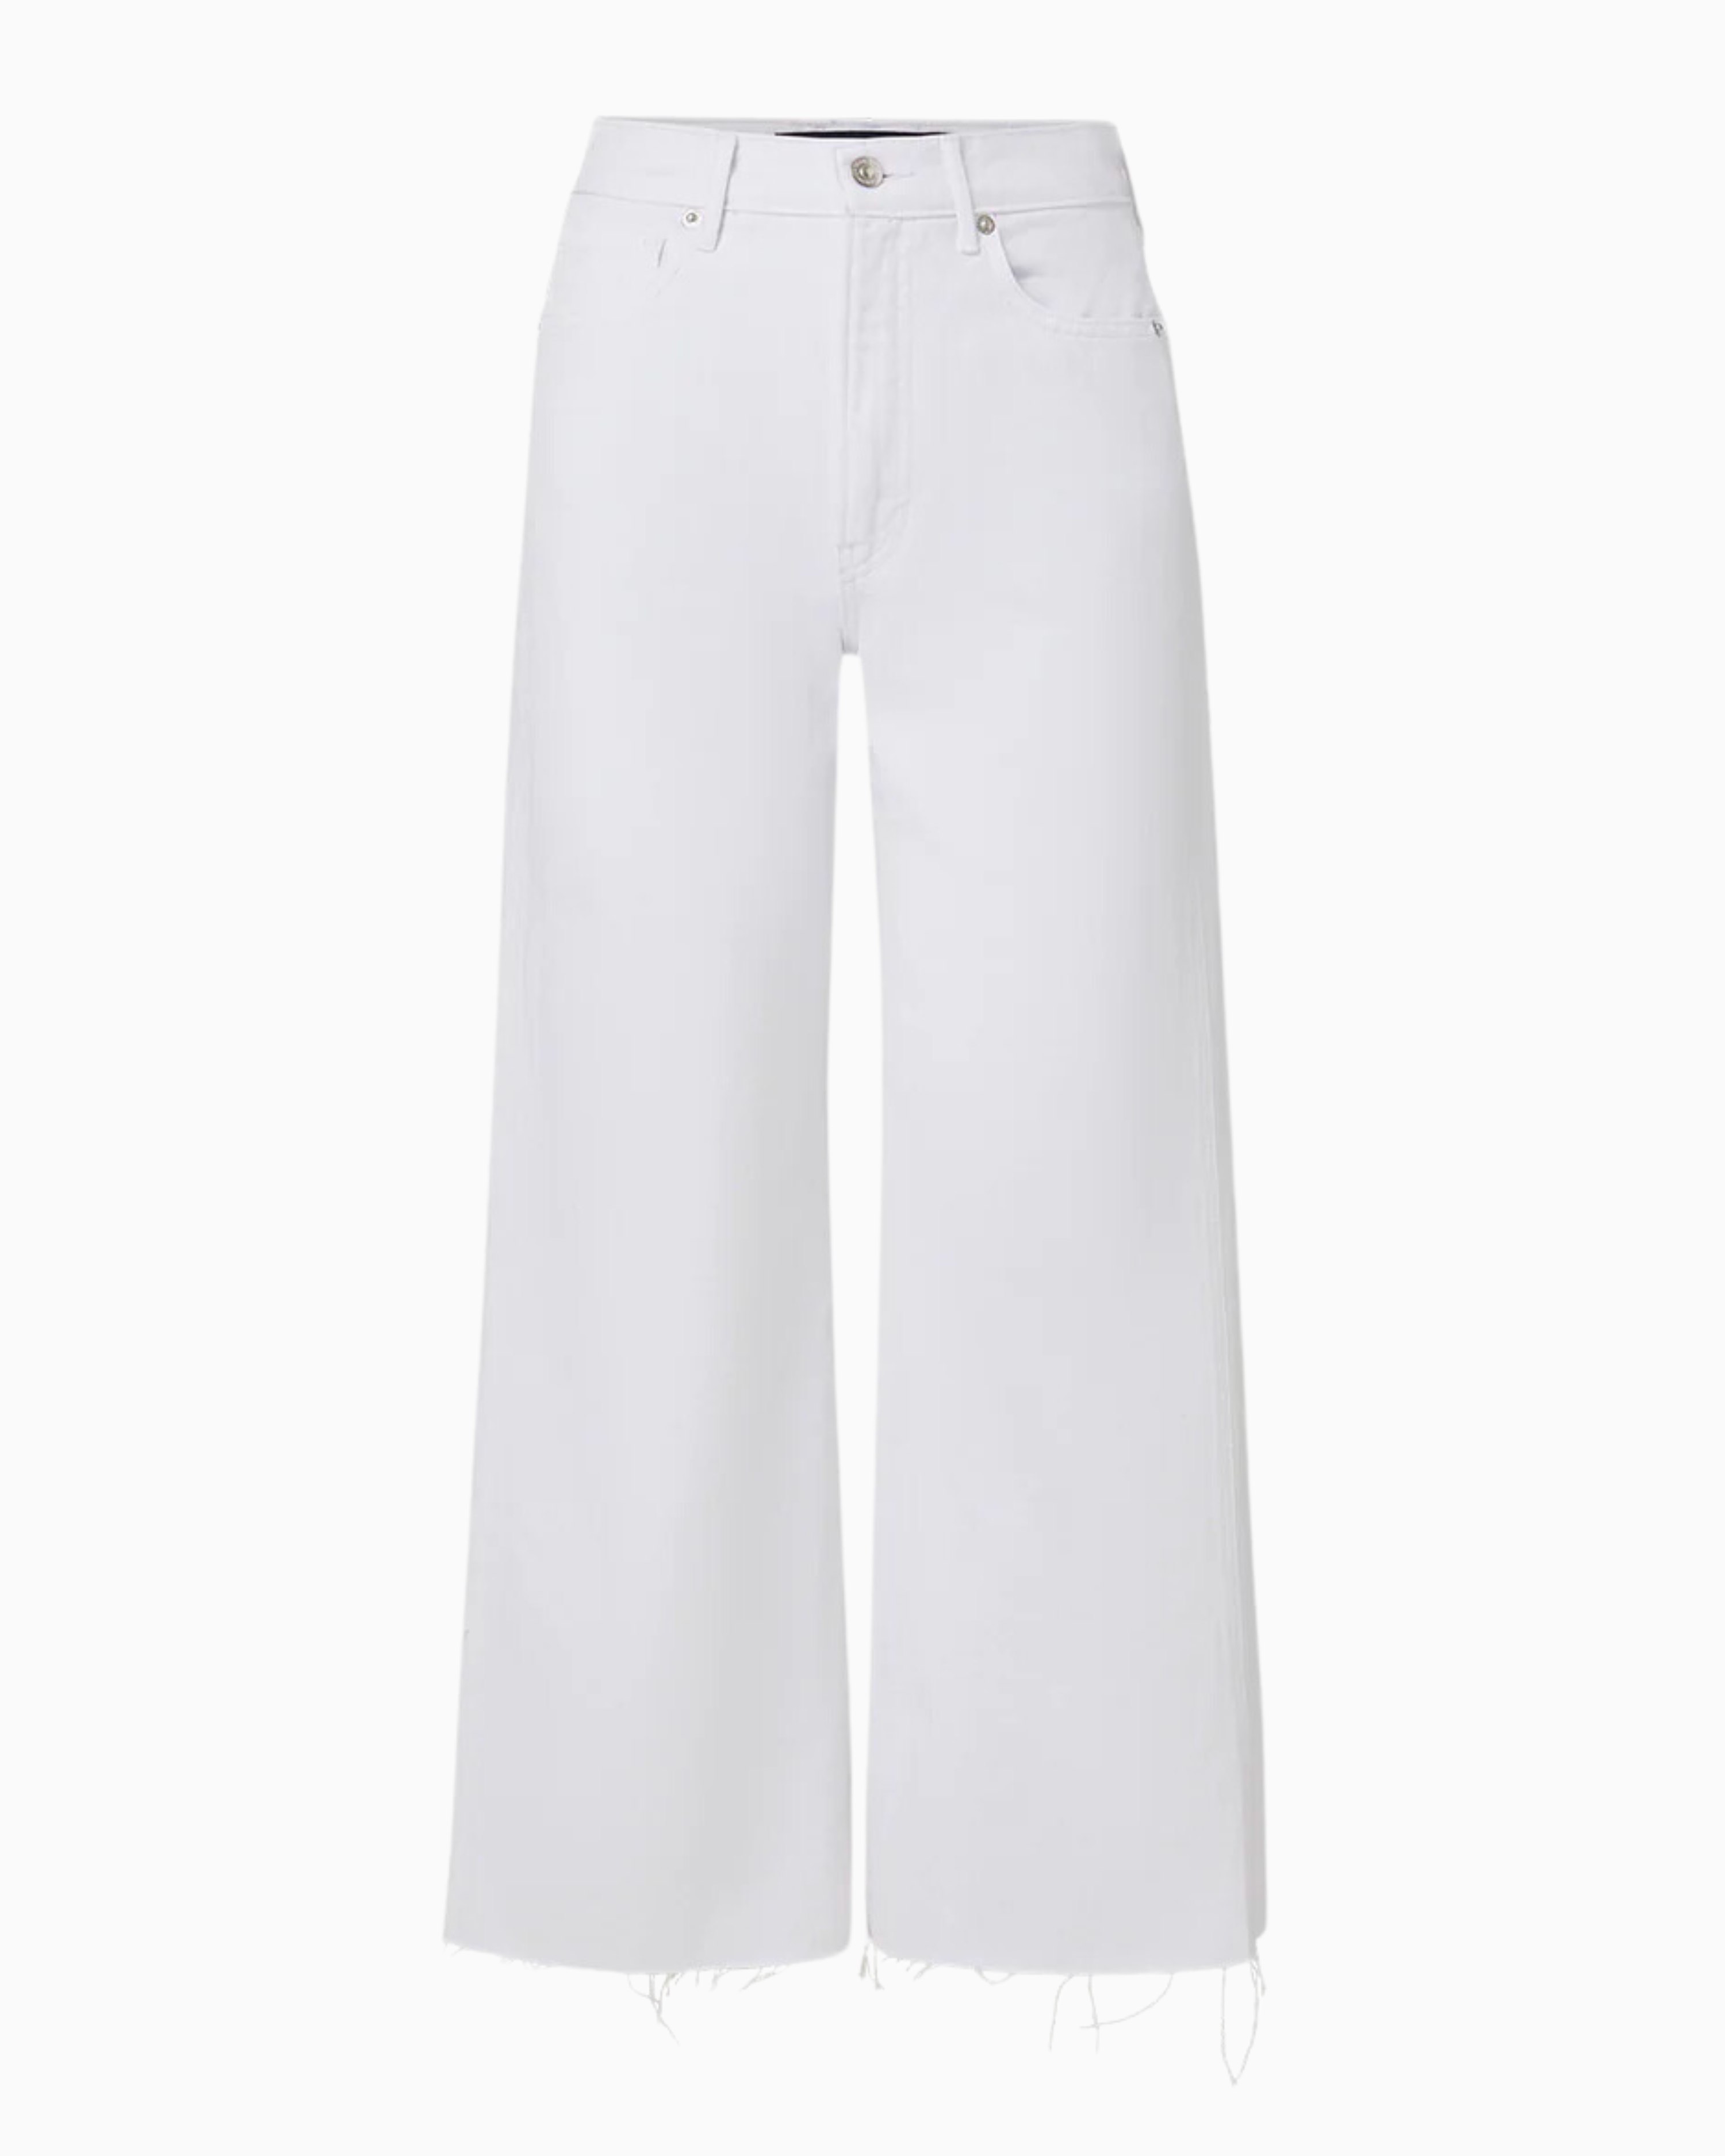 Veronica Beard Taylor Crop Jean in White